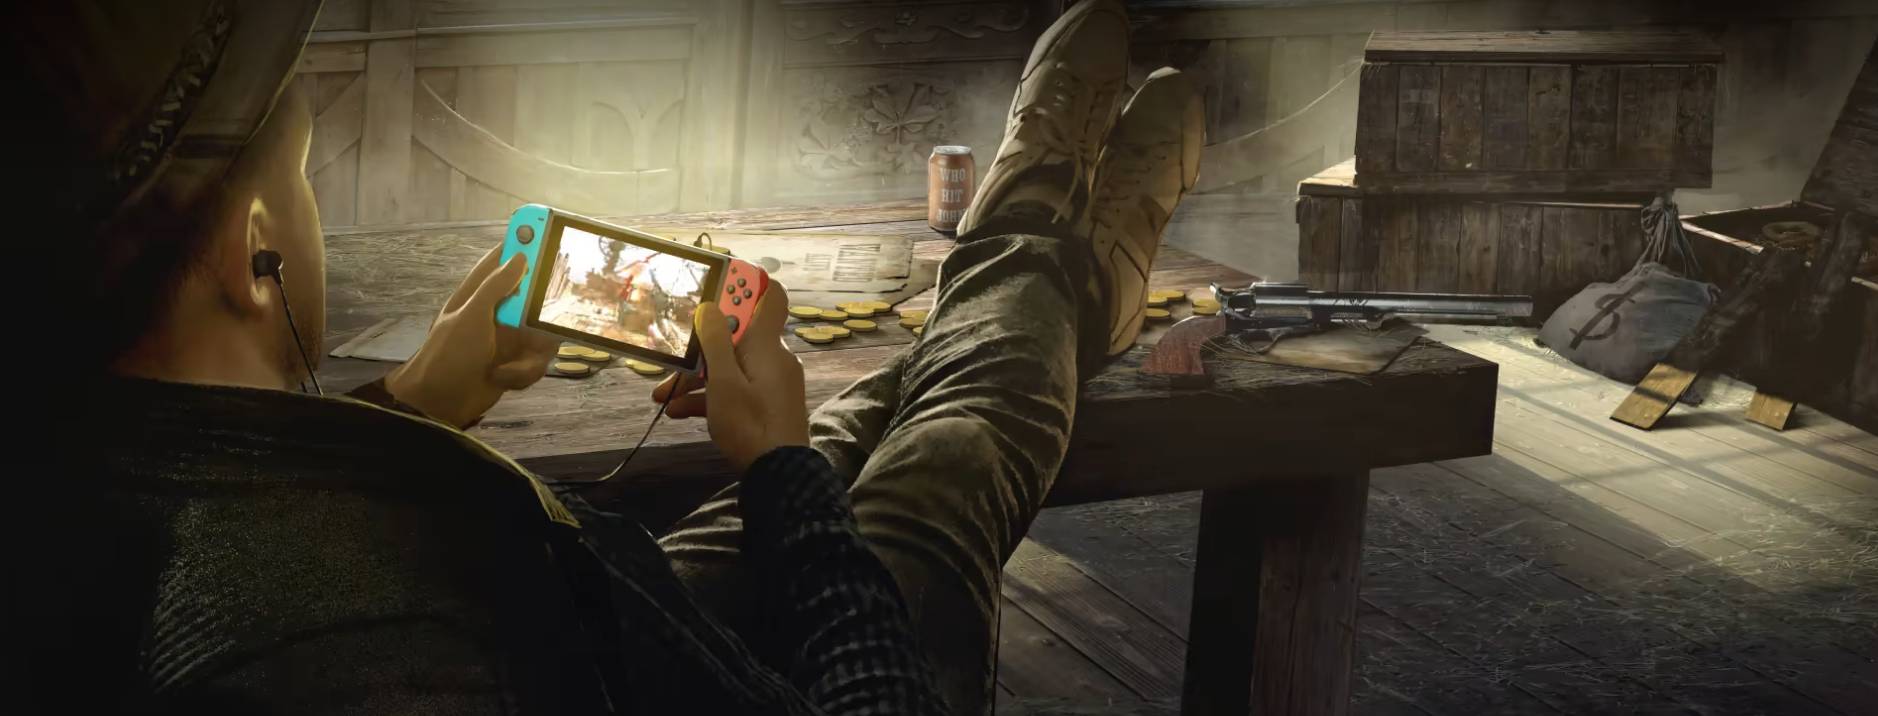 Enhanced Version Call of Juarez: Gunslinger Announced For Nintendo Switch This December